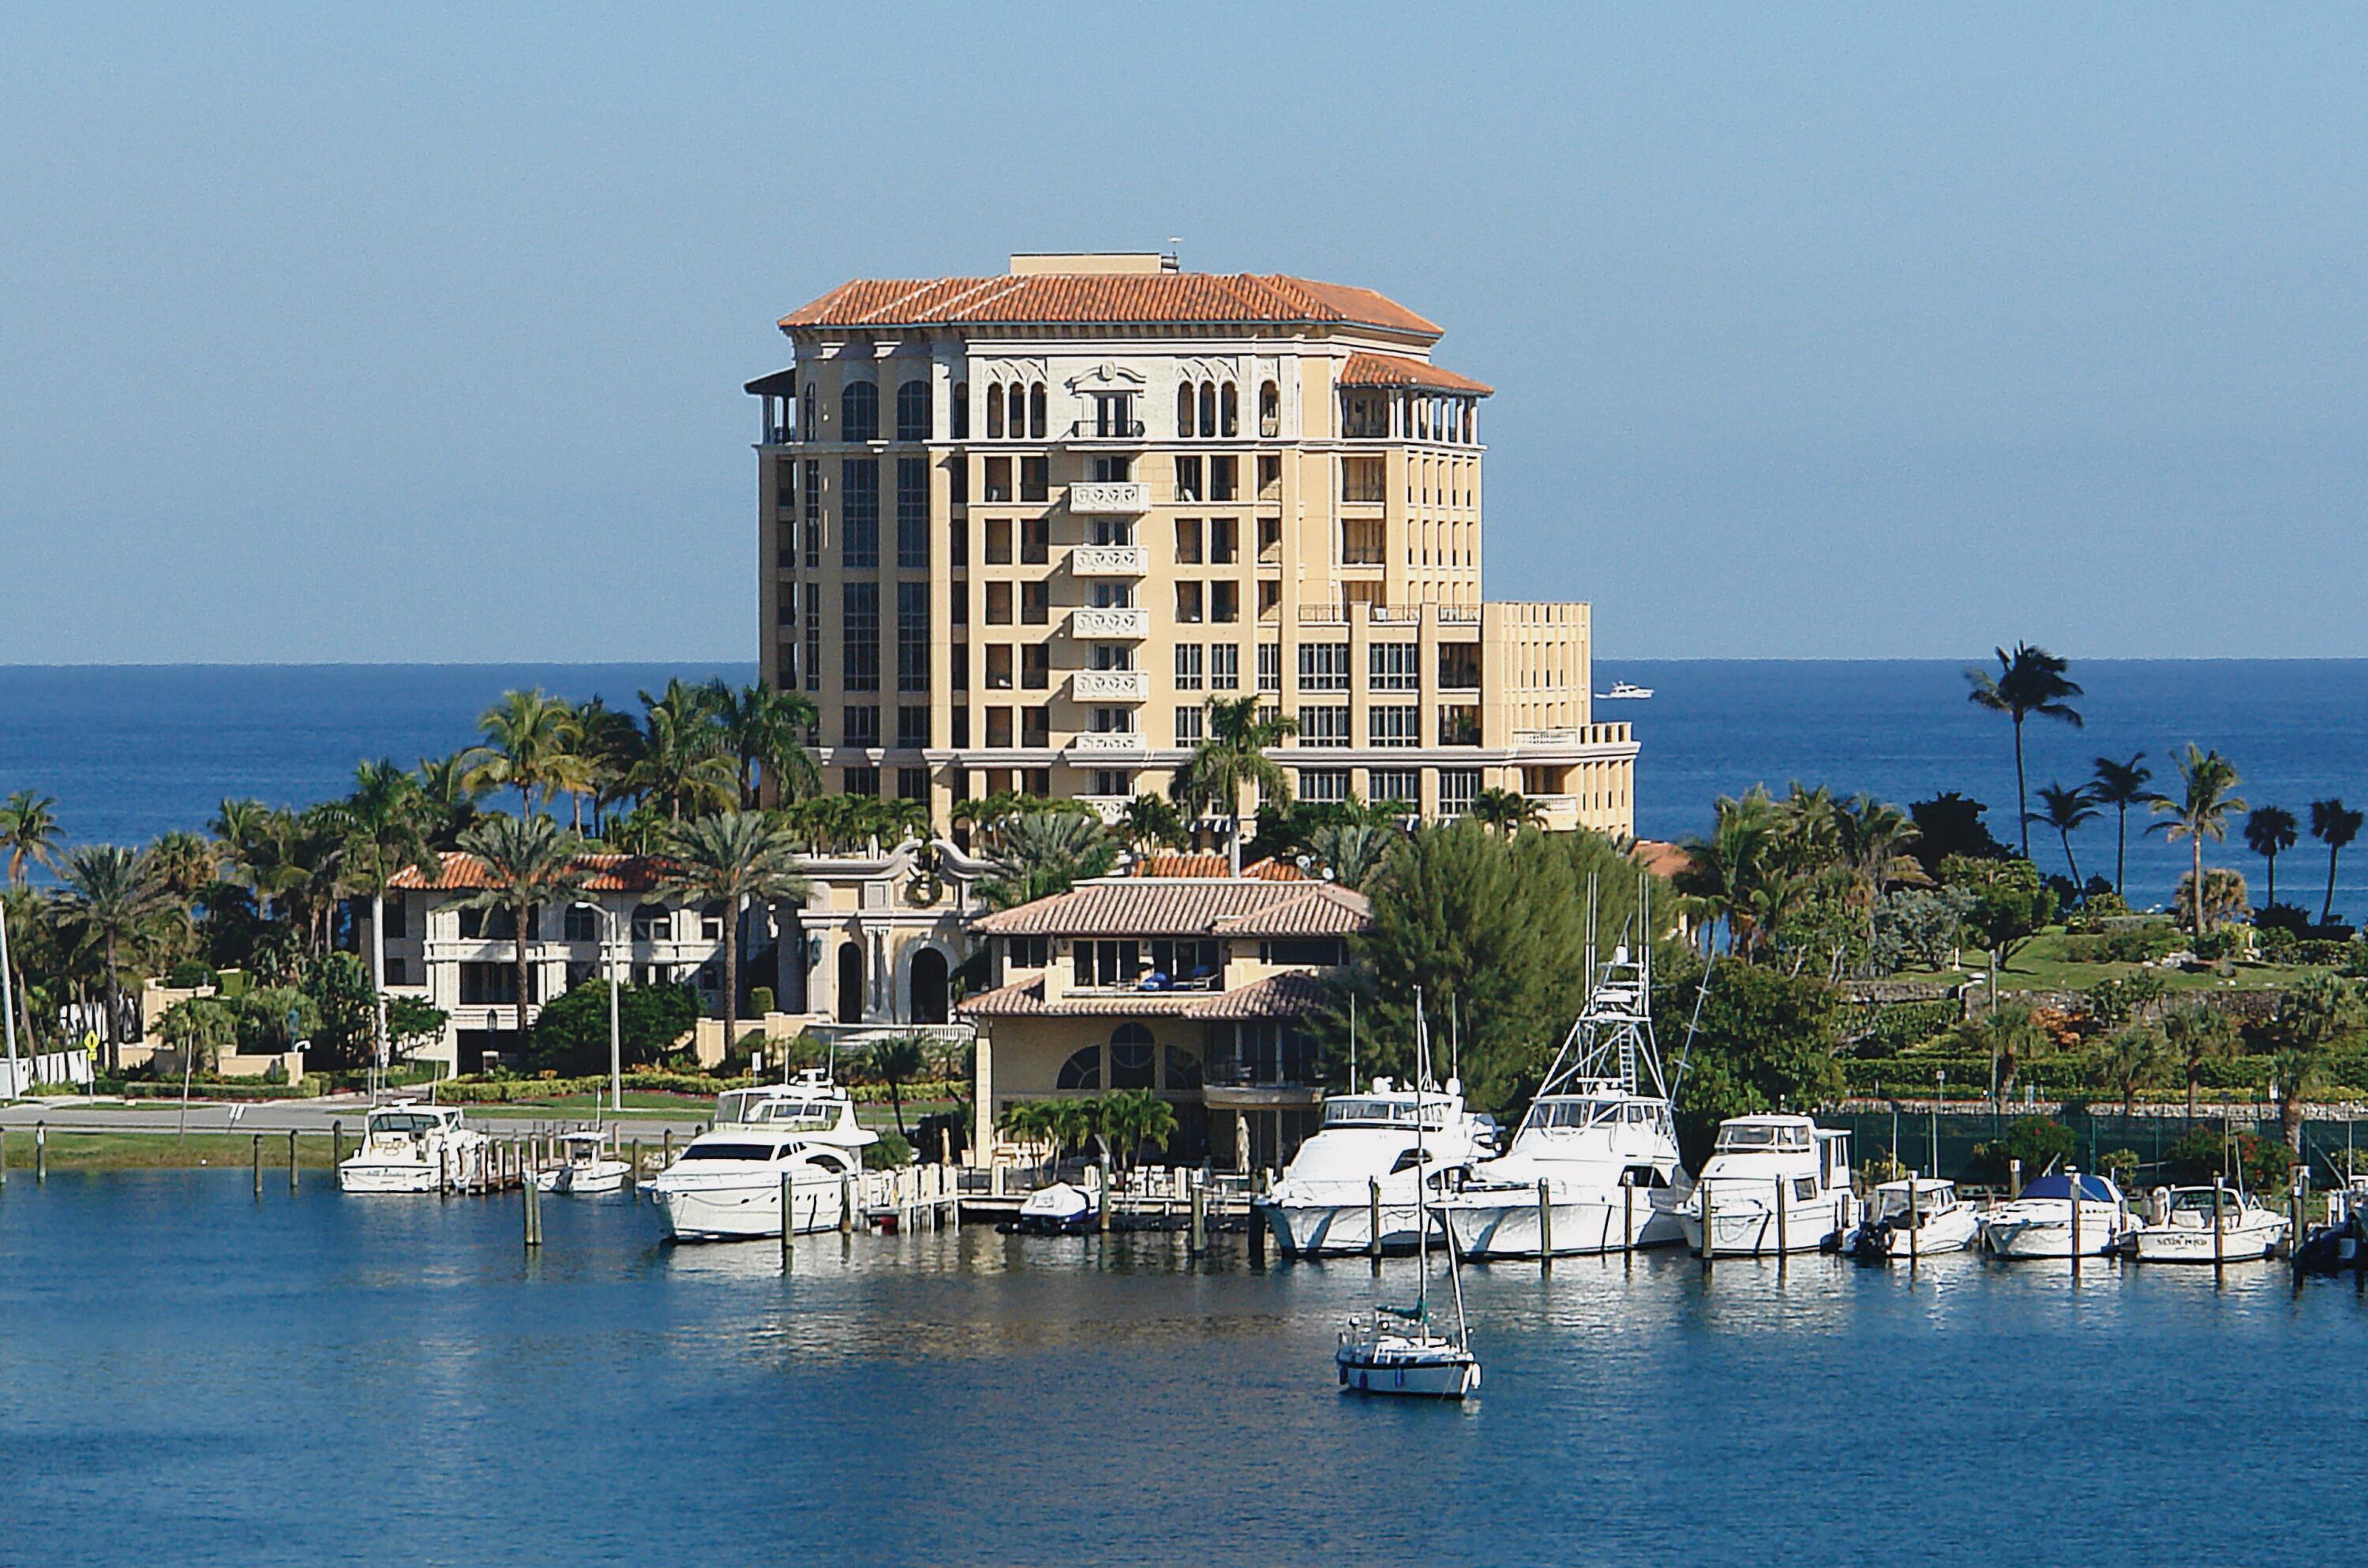 Property for Sale at 400 S Ocean Boulevard 26   28, Boca Raton, Palm Beach County, Florida - Bedrooms: 6 
Bathrooms: 7.5  - $14,000,000